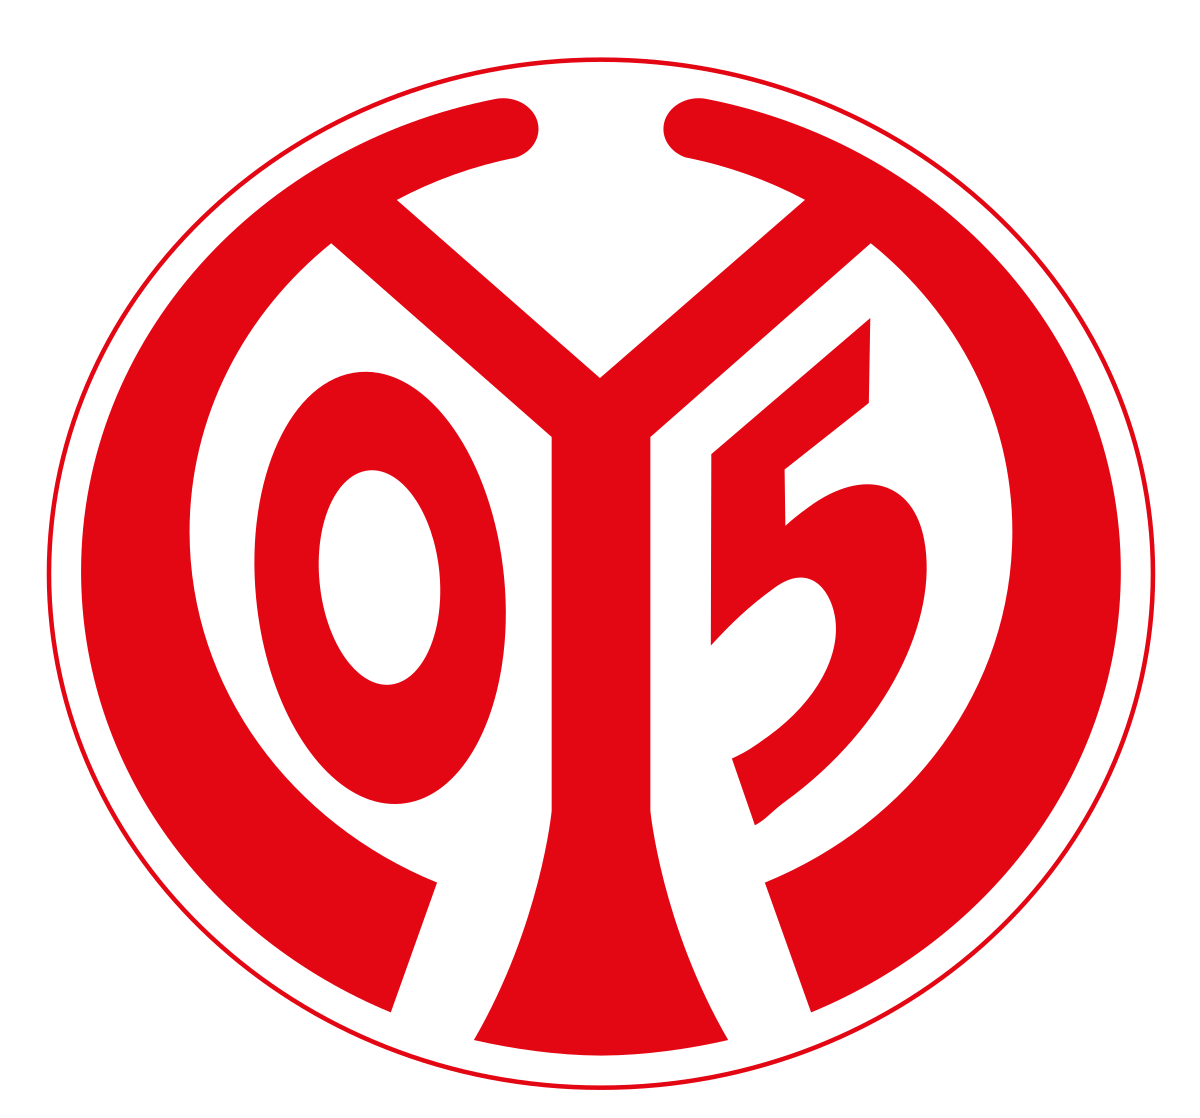 File:Logo Mainz 05.svg - Wikimedia Commons